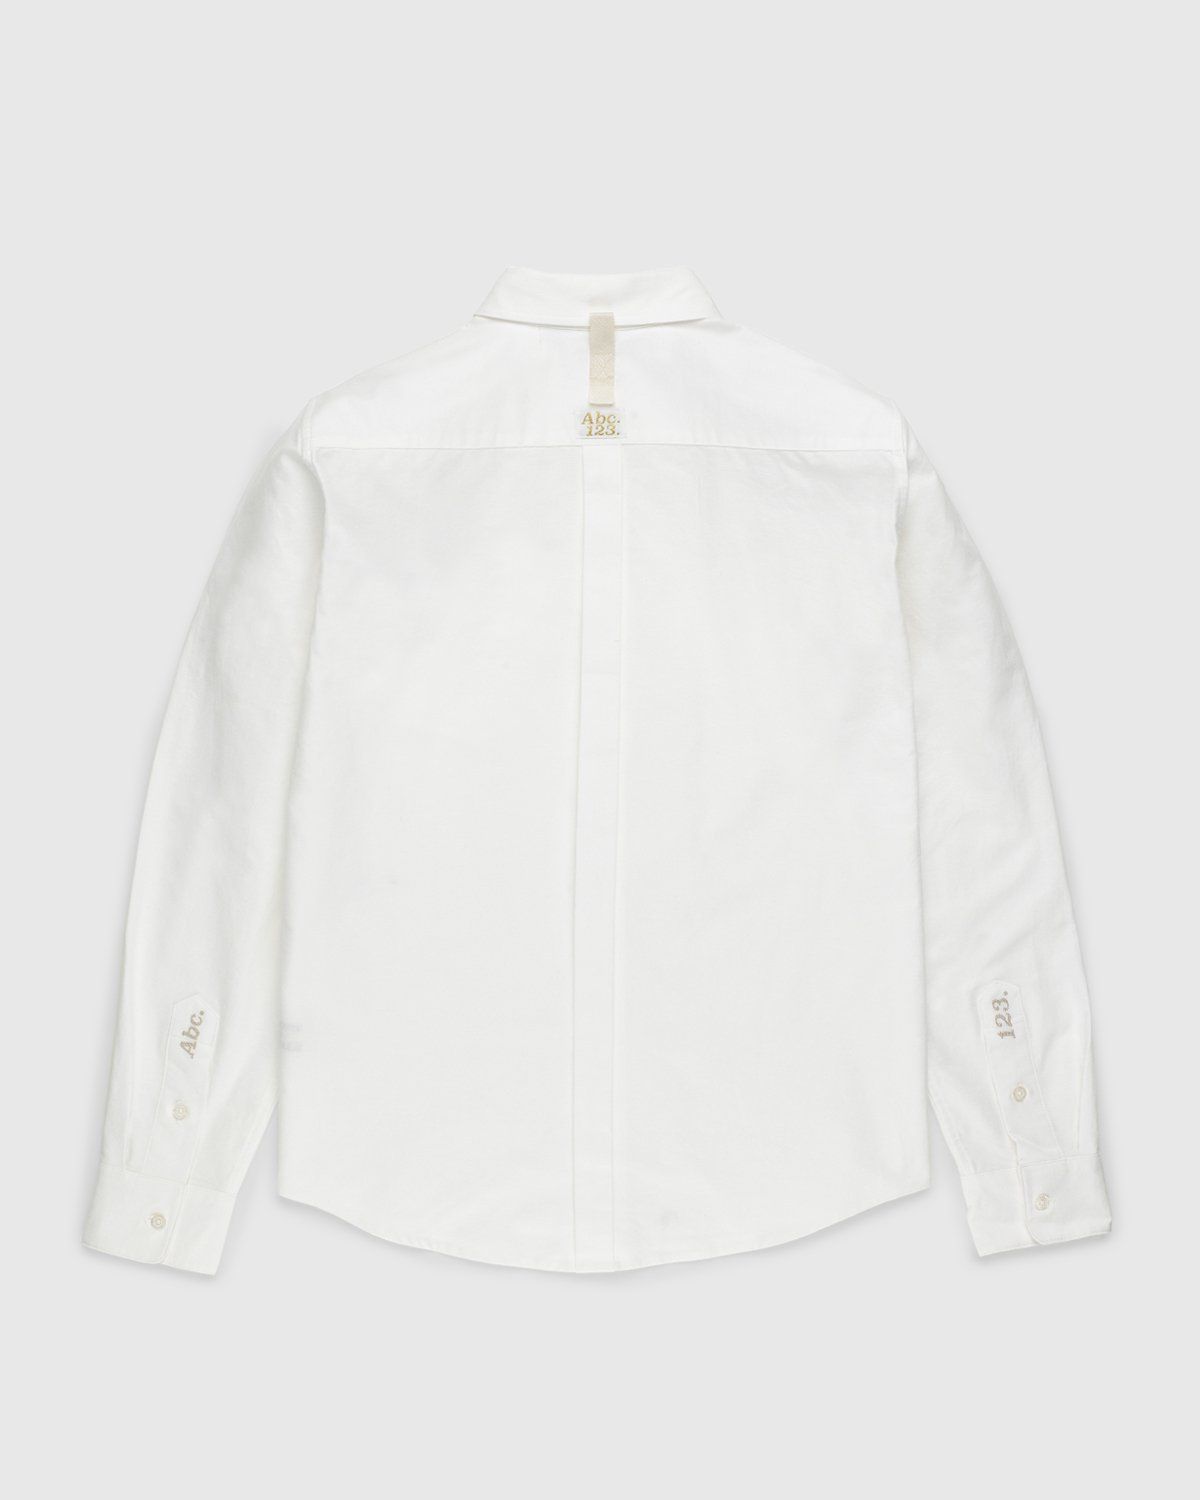 Abc. – Oxford Woven Shirt Selenite - Longsleeve Shirts - White - Image 2